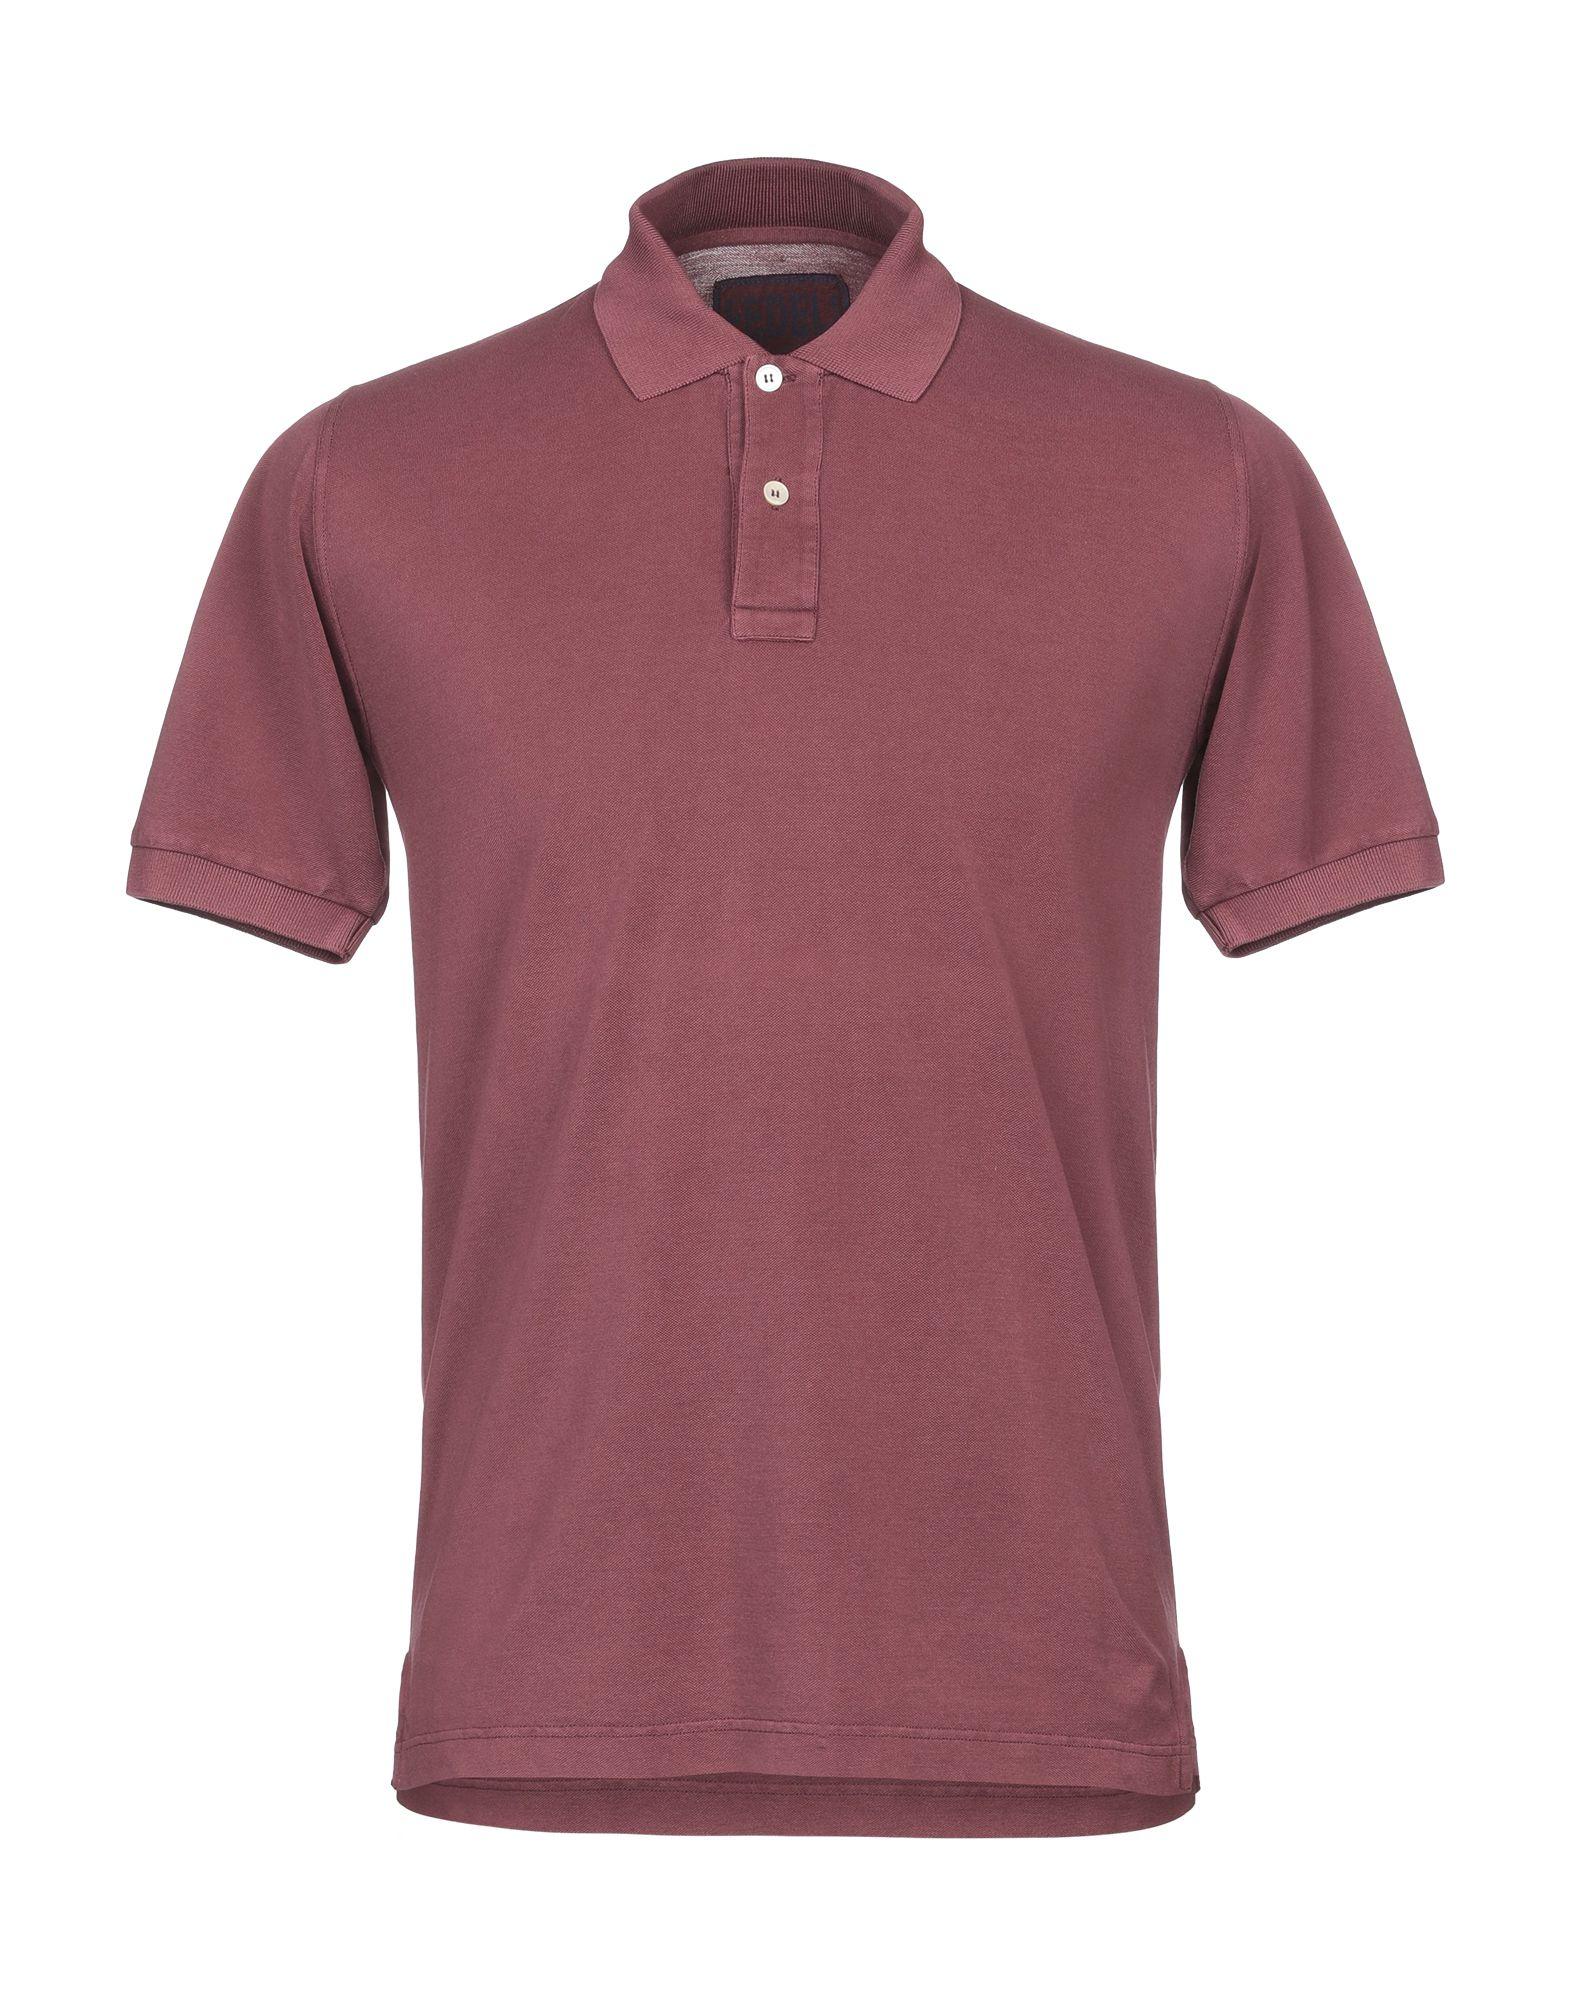 Fedeli Cotton Polo Shirt in Maroon (Purple) for Men - Lyst